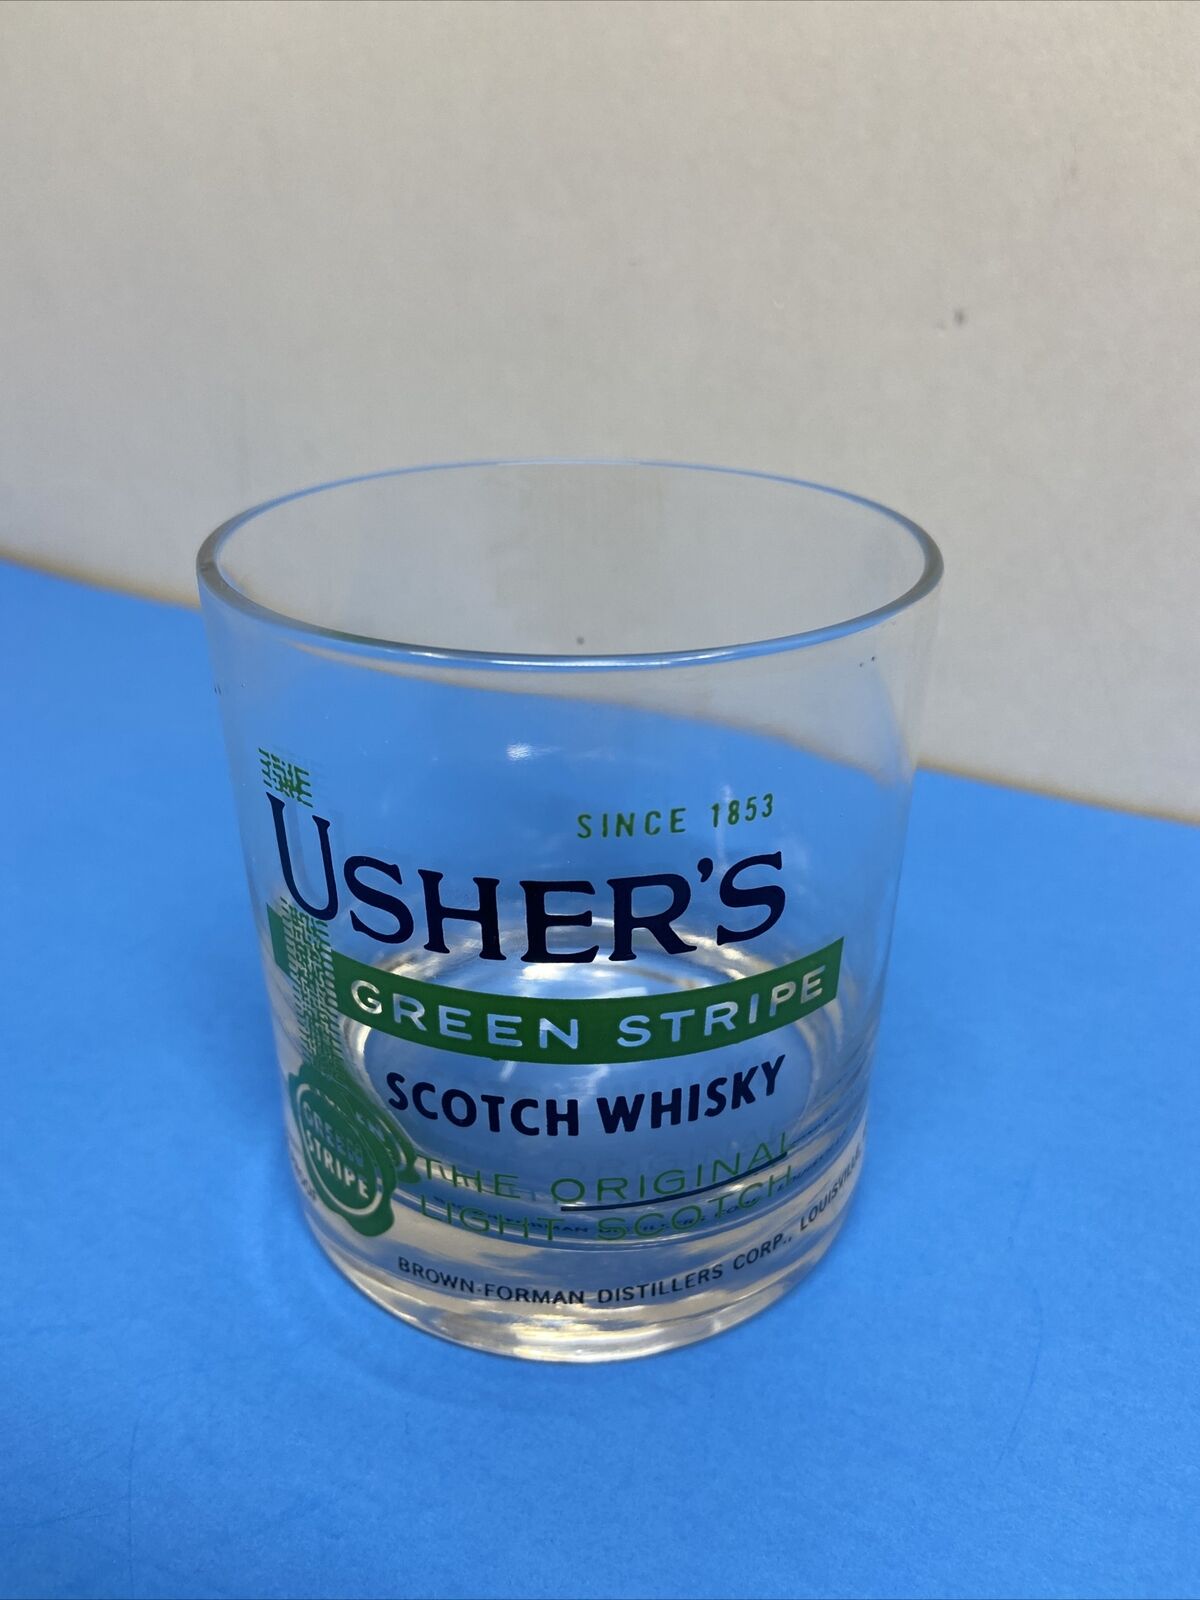 Vintage Usher's Green Stripe Scotch Whiskey Rock Glass Brown-Forman Distillers